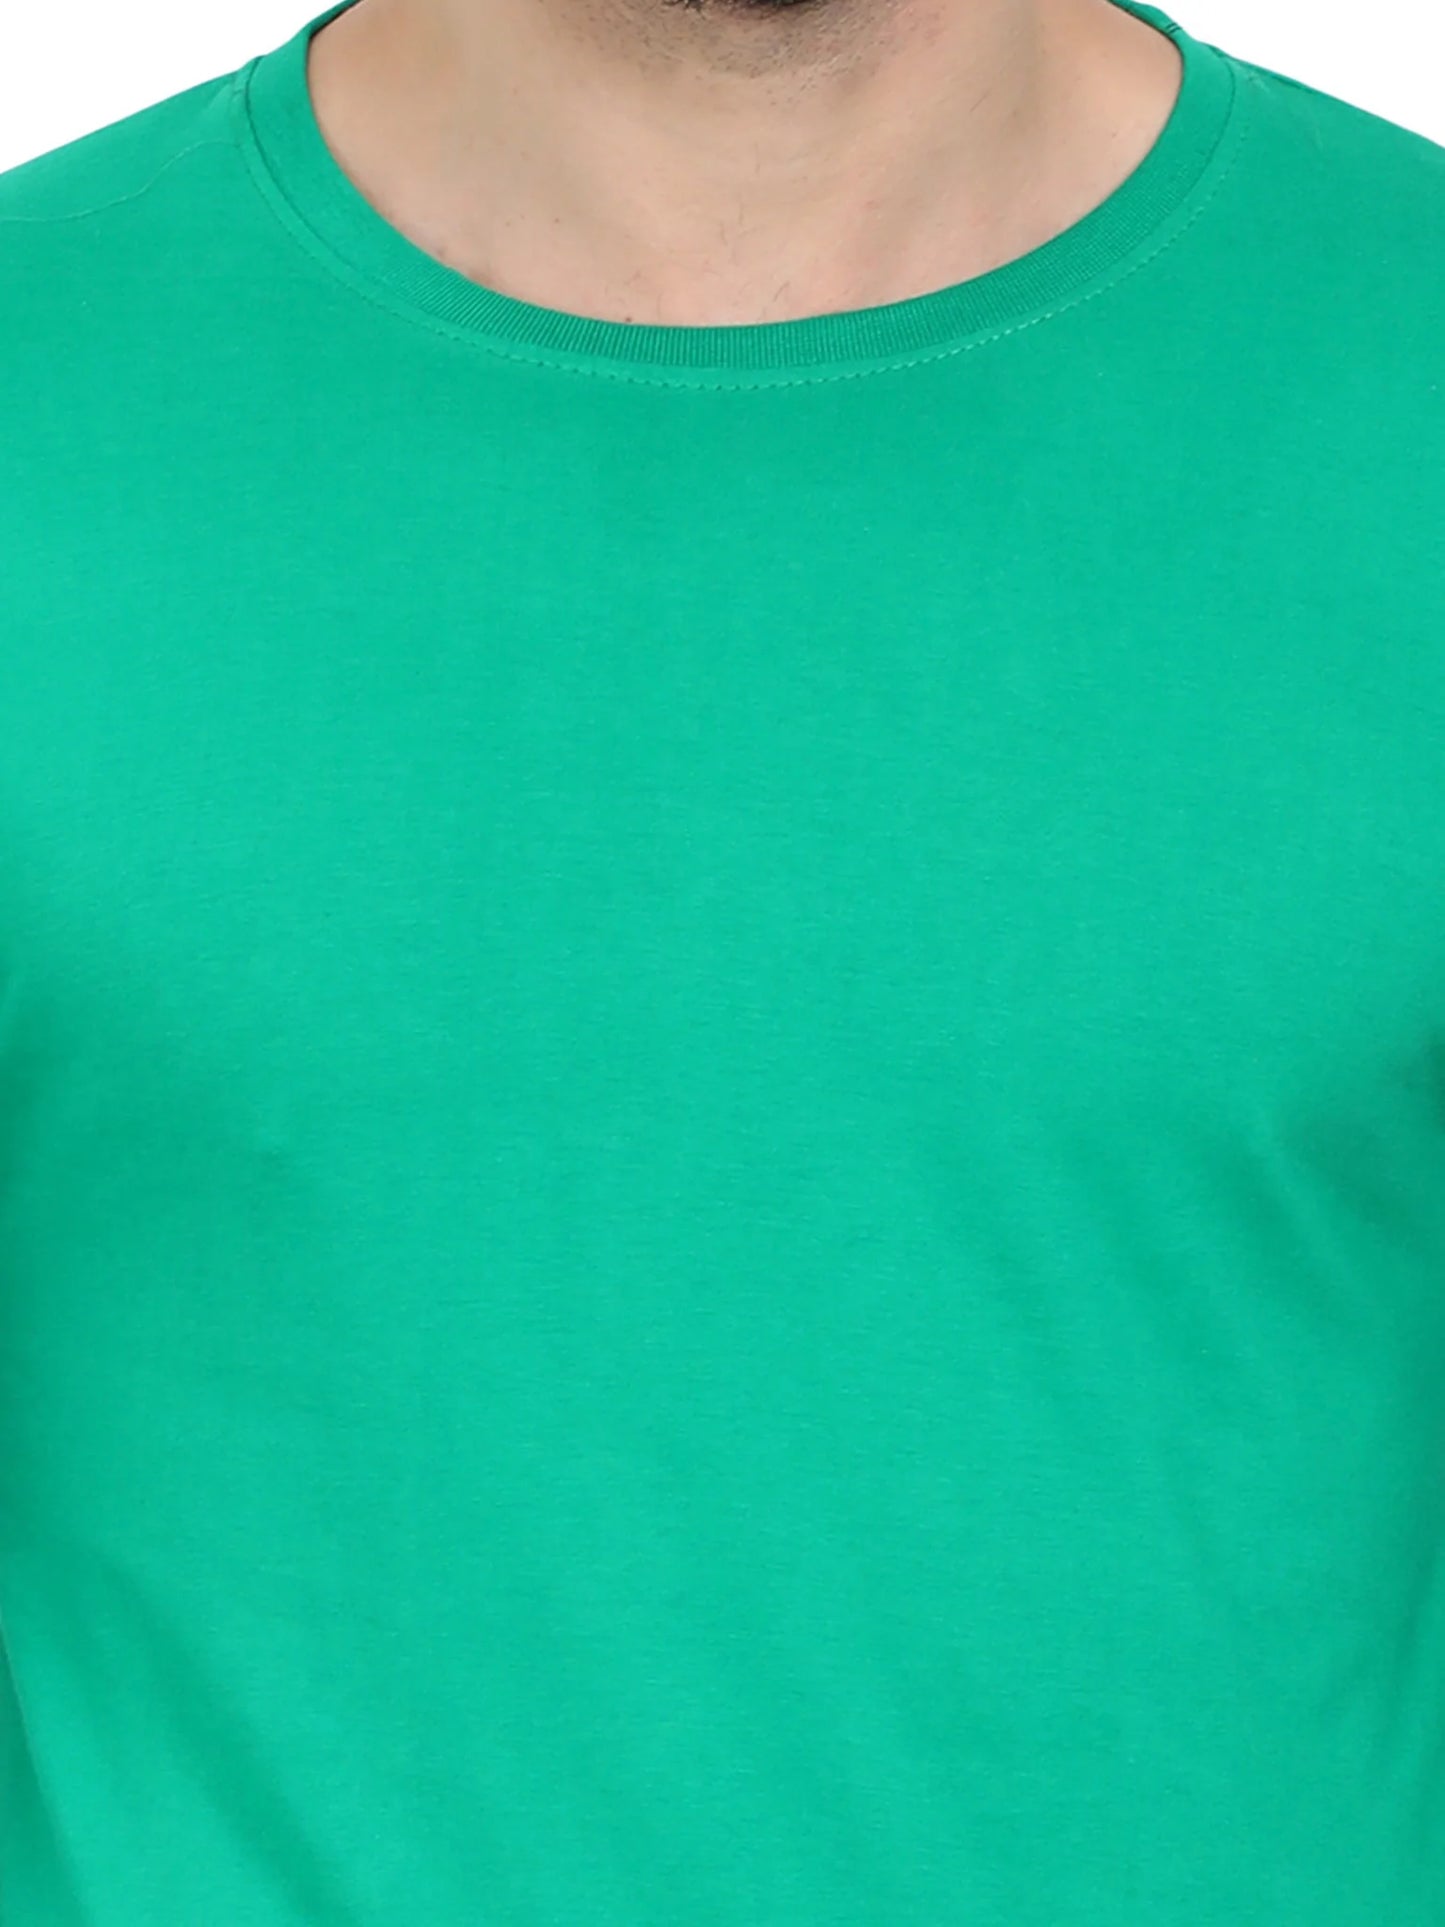 Men's Cotton Plain Round Neck Full Sleeve Pakistan Green Color T-Shirt